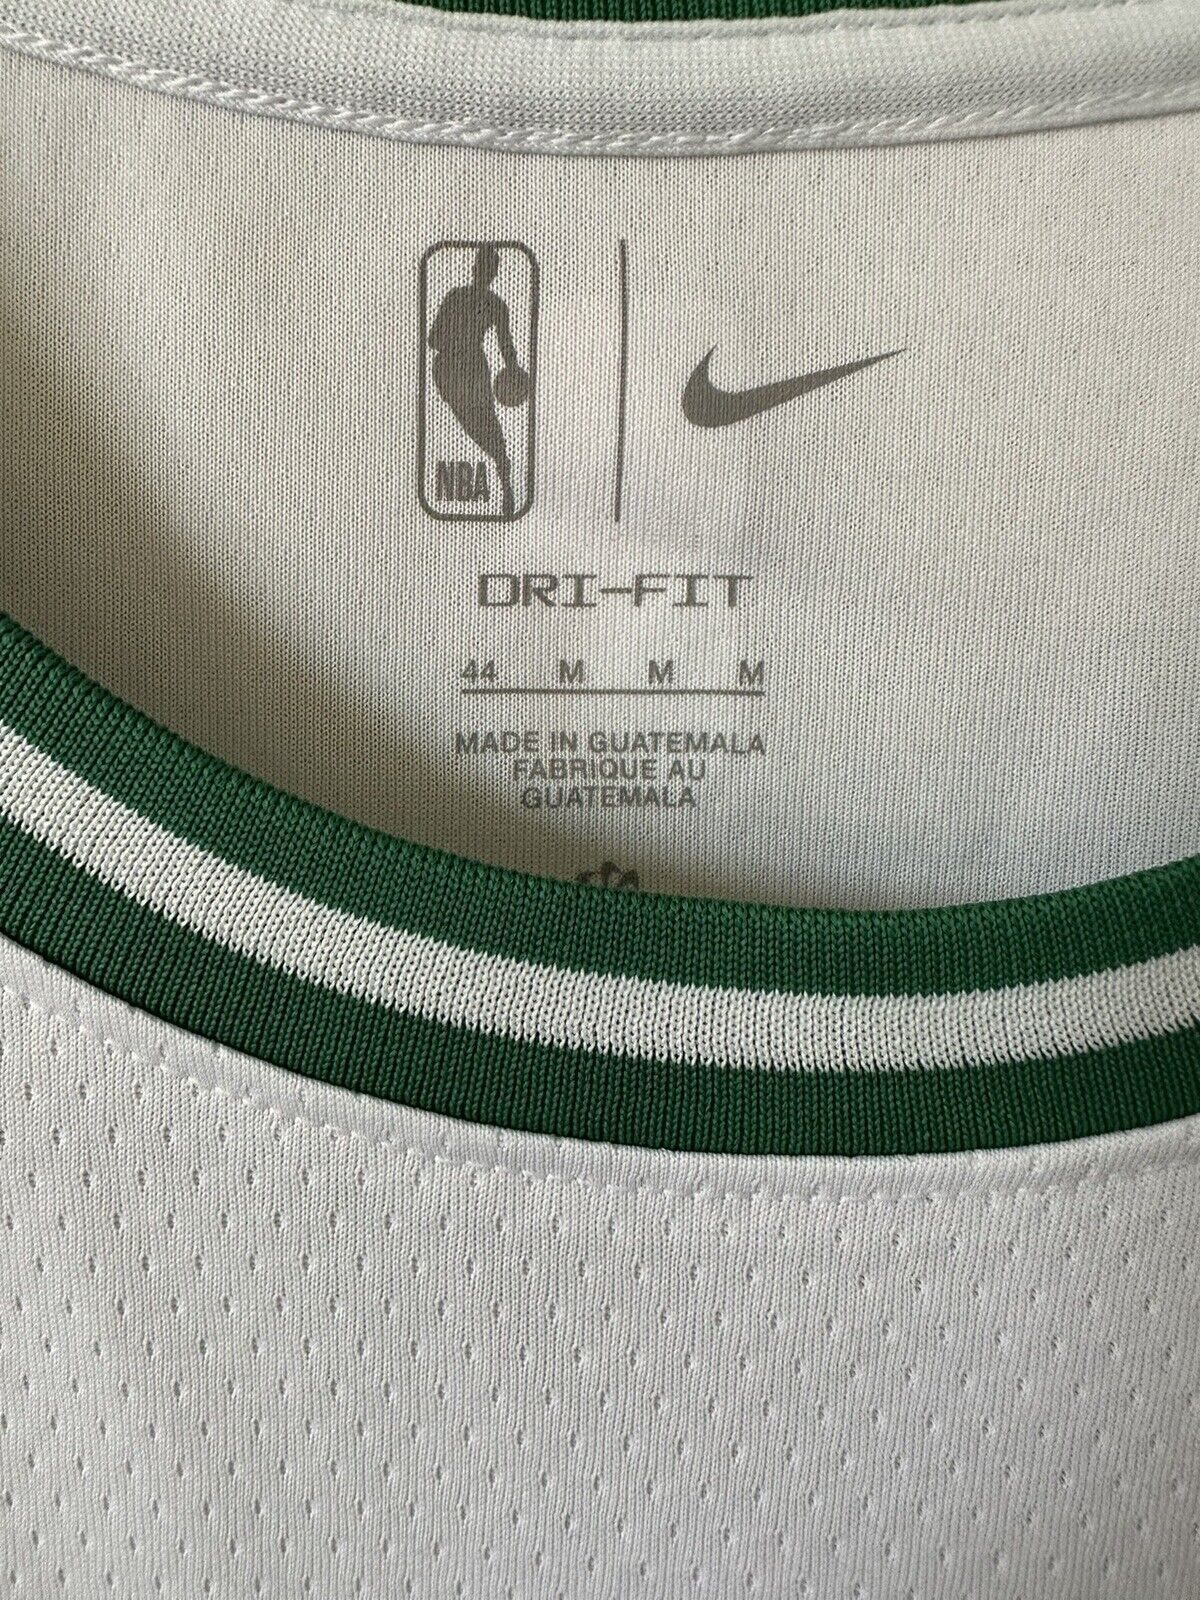 Nike NBA Boston Celtics Association Edition Jersey Basketball Mens Medium *DF*